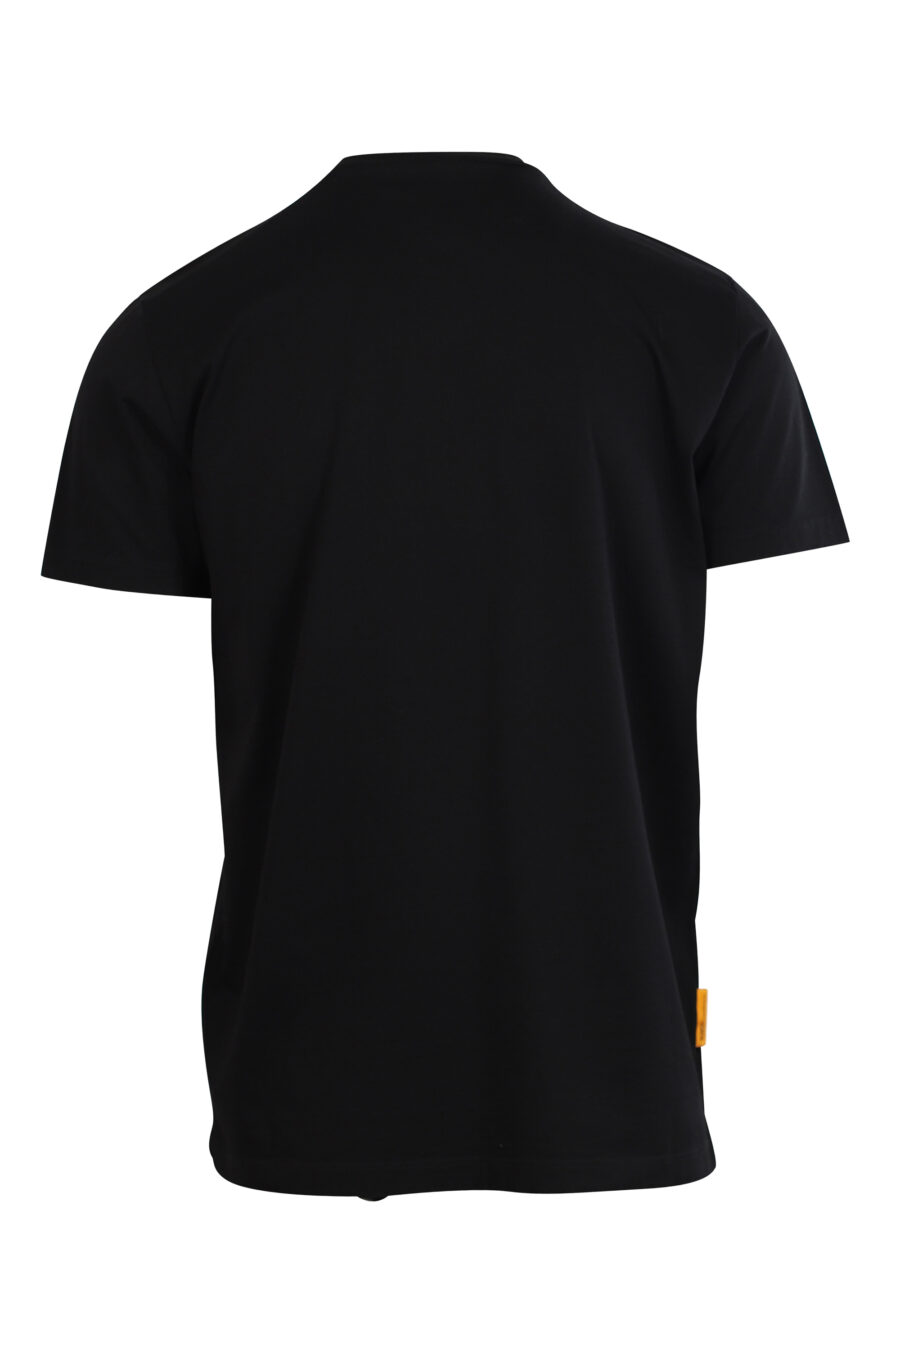 Schwarzes T-Shirt mit "pac-man" Maxilogo - 8054148177485 2